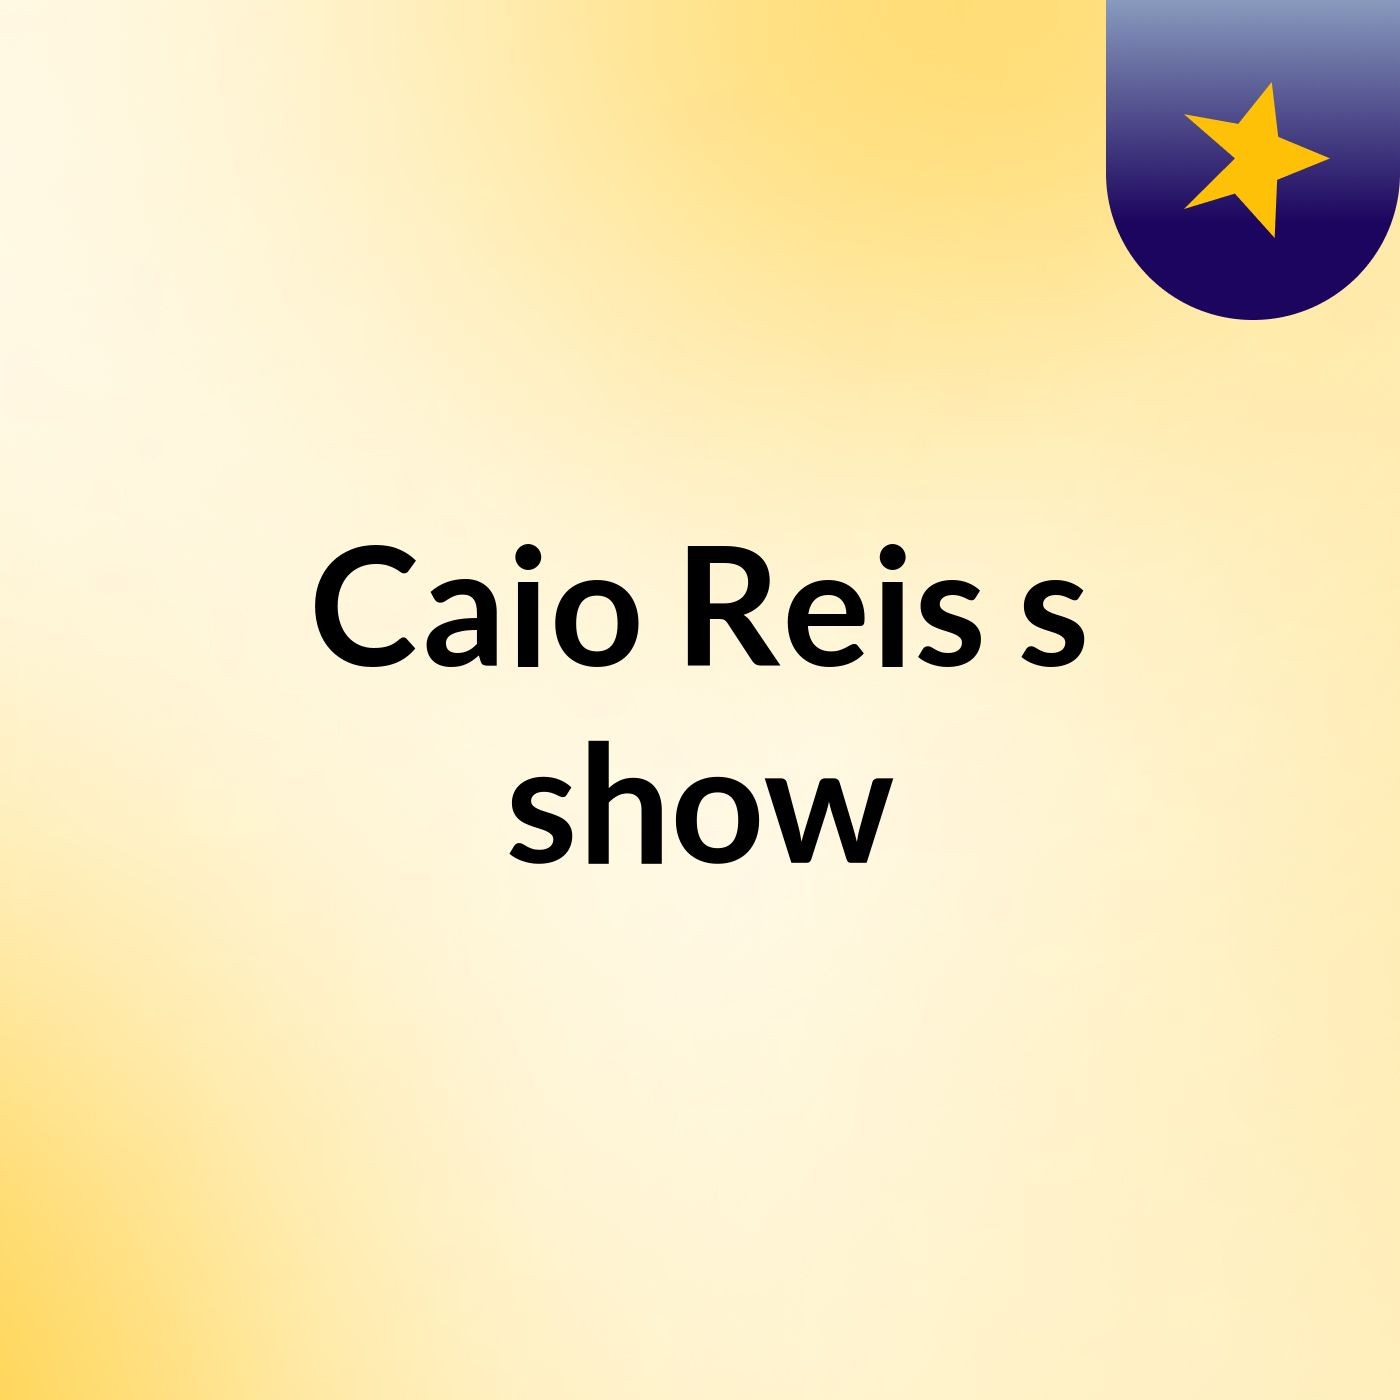 Caio Reis's show